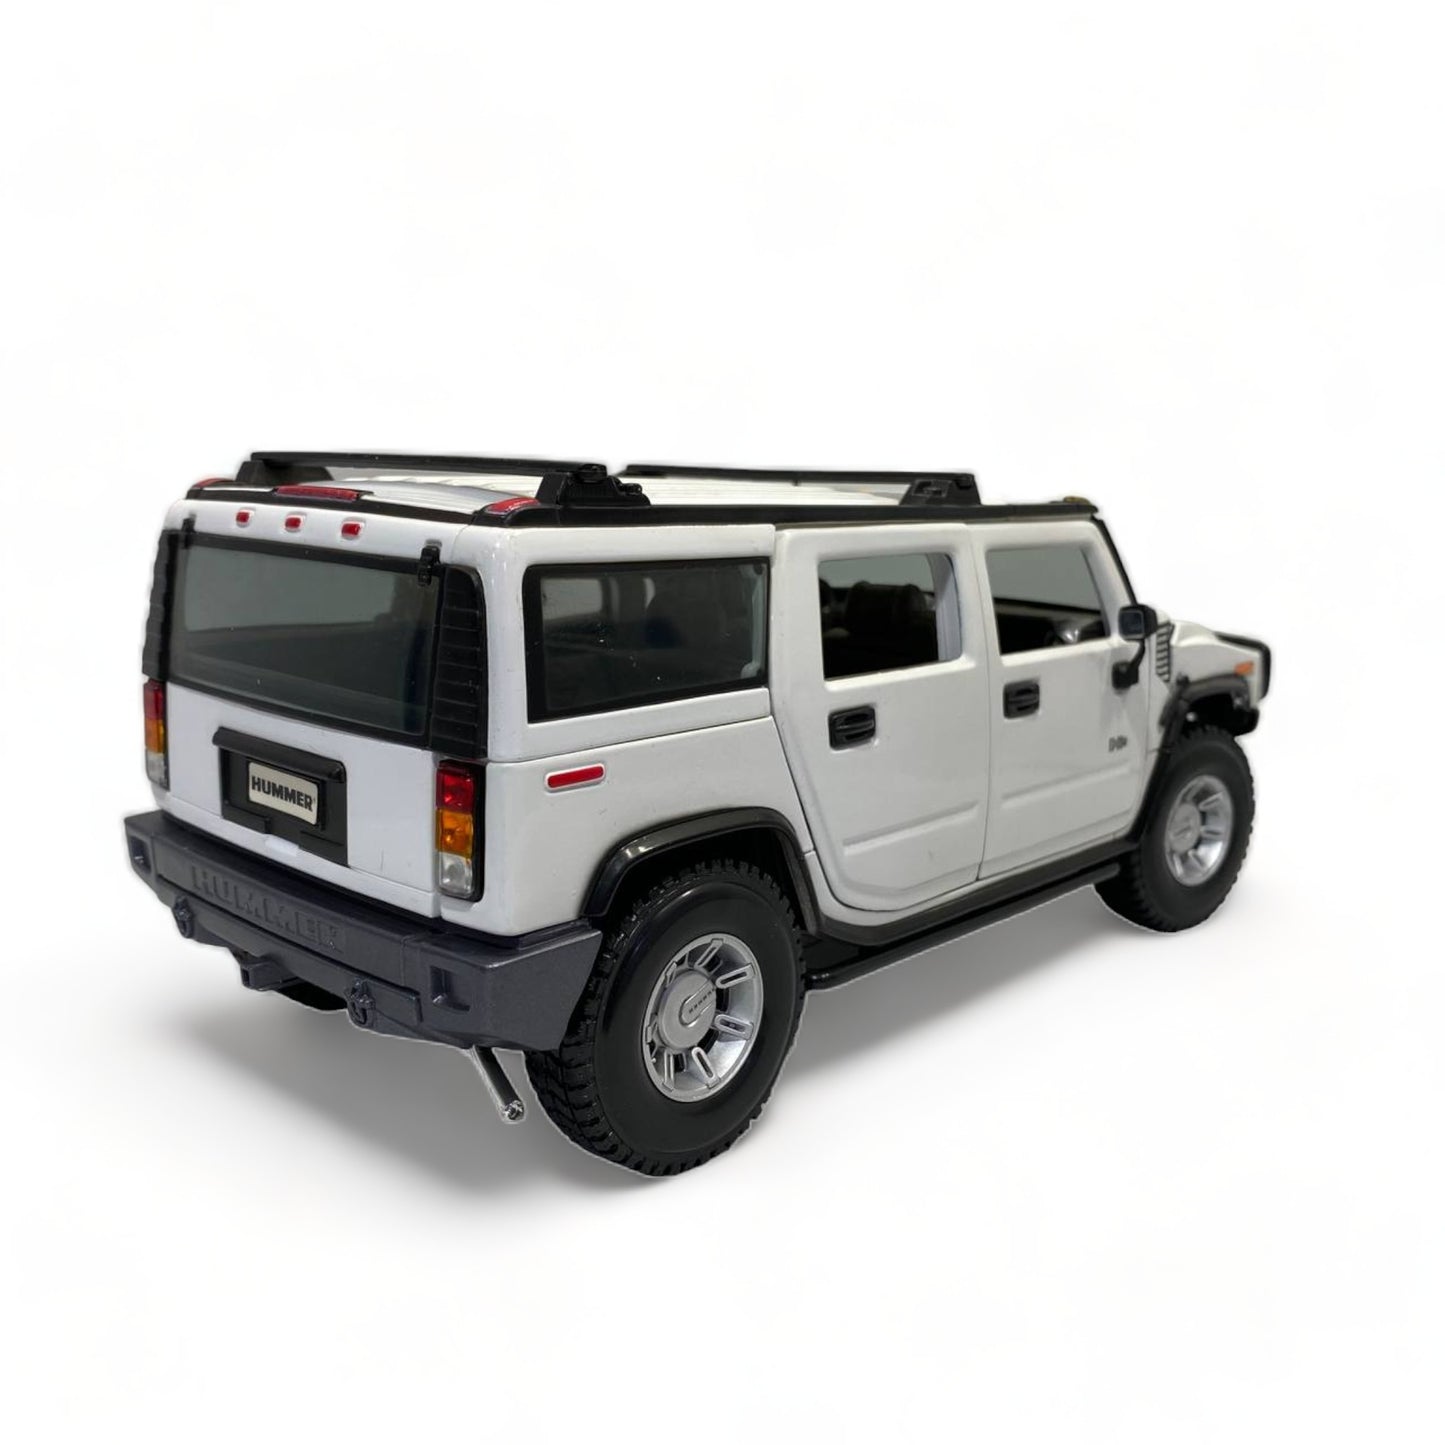 Maisto HUMMER H2 SUV - White (1/18 Diecast Metal, All Opening)|Sold in Dturman.com Dubai UAE.